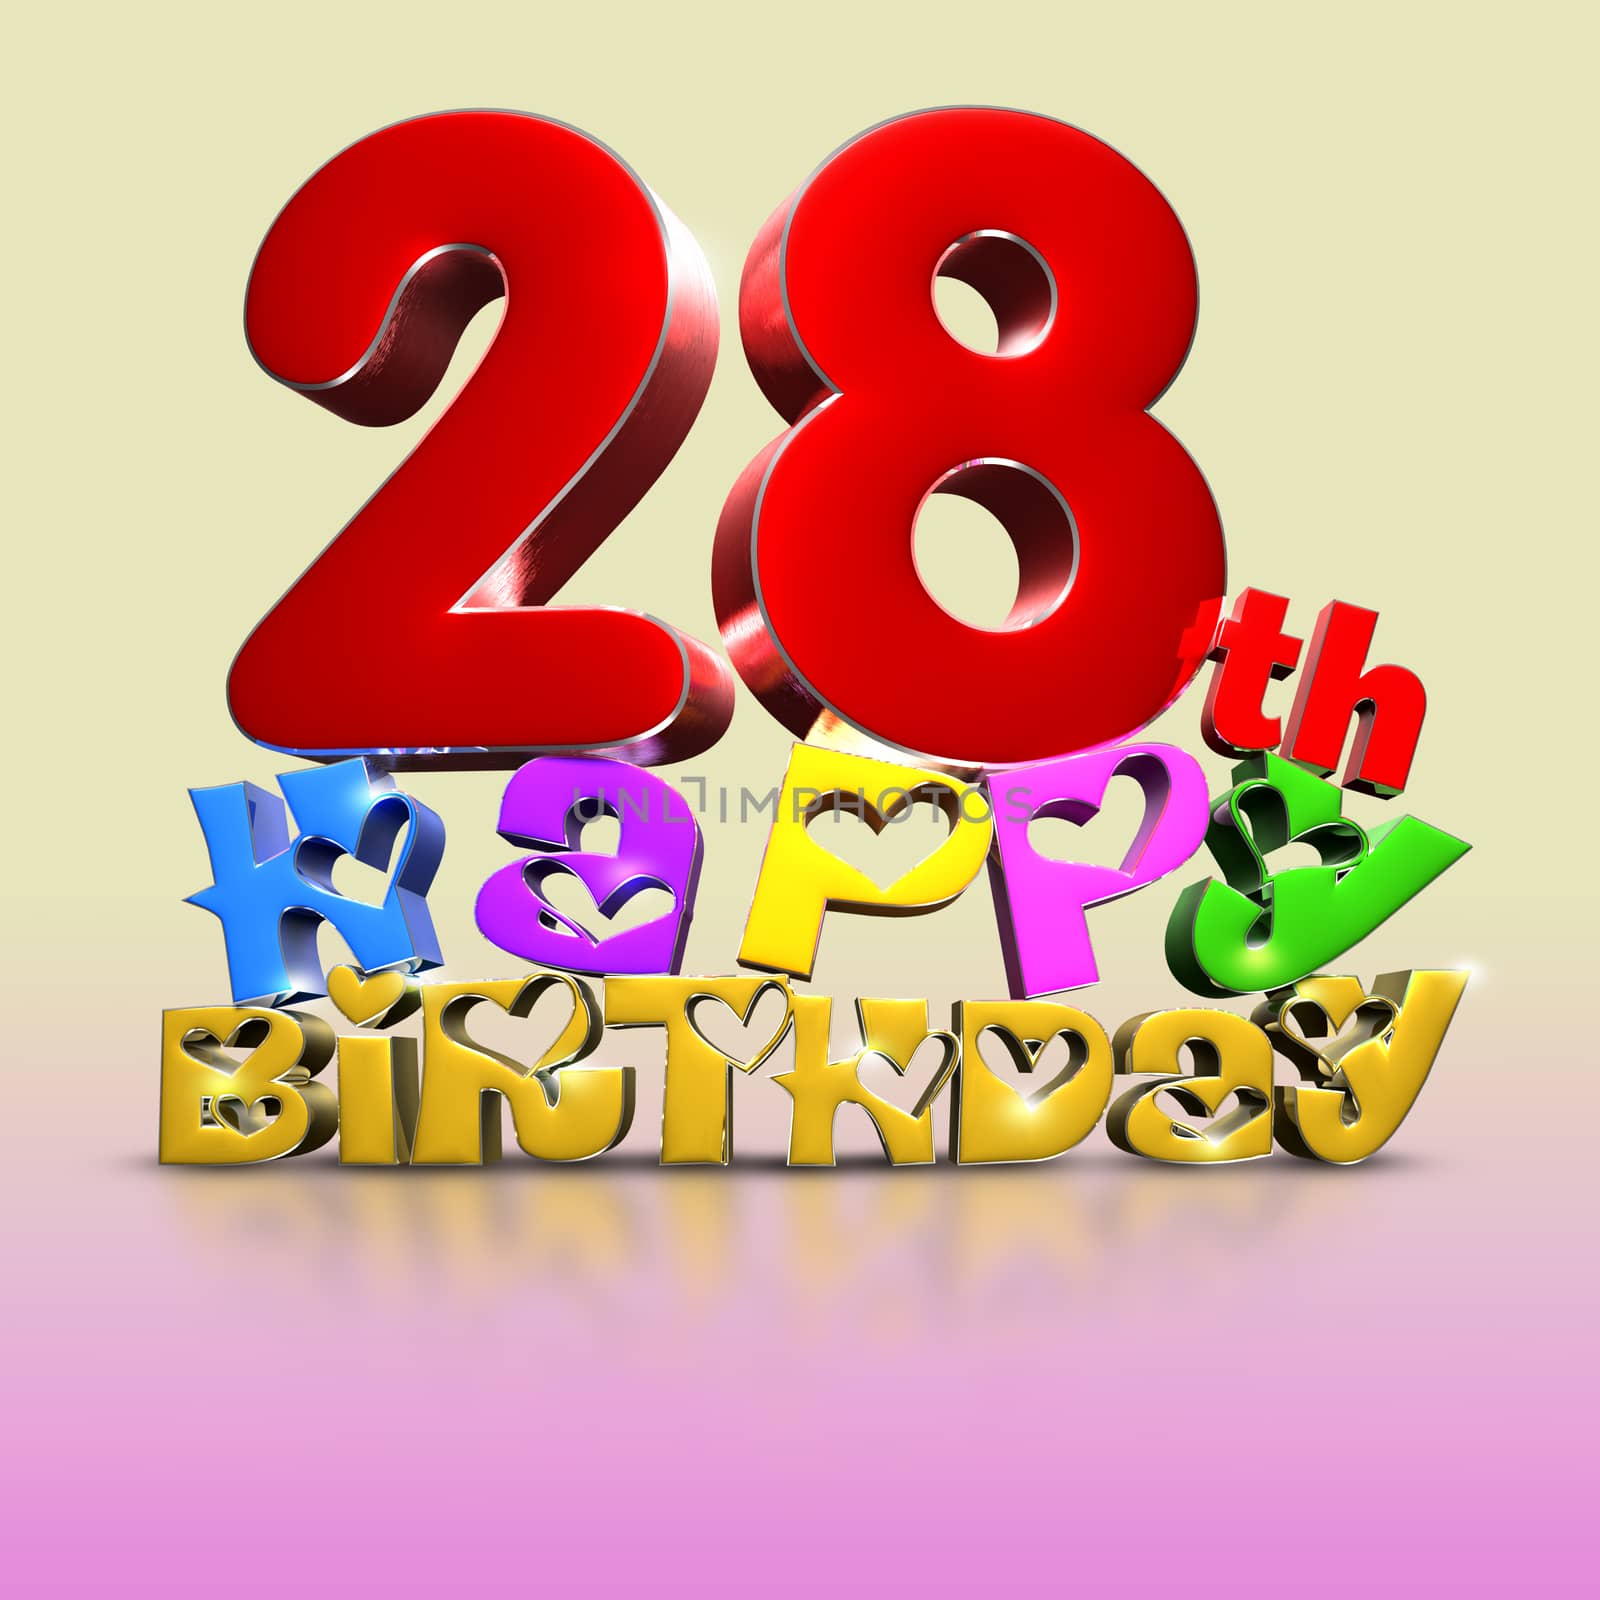 28 th happy birthday 3d. by thitimontoyai